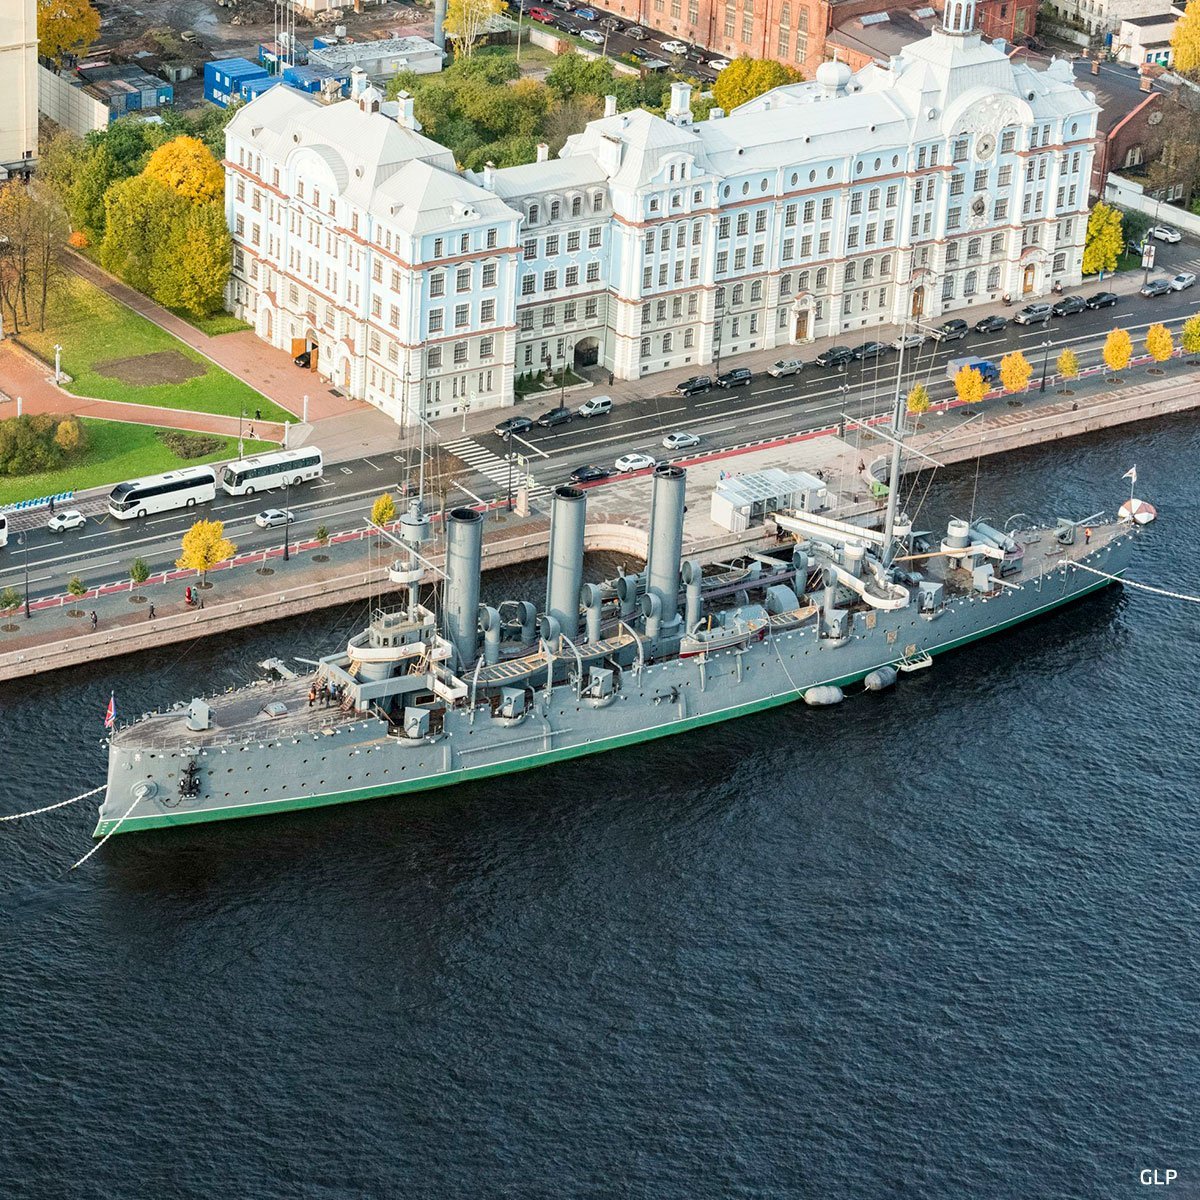 Корабль крейсер аврора санкт петербург